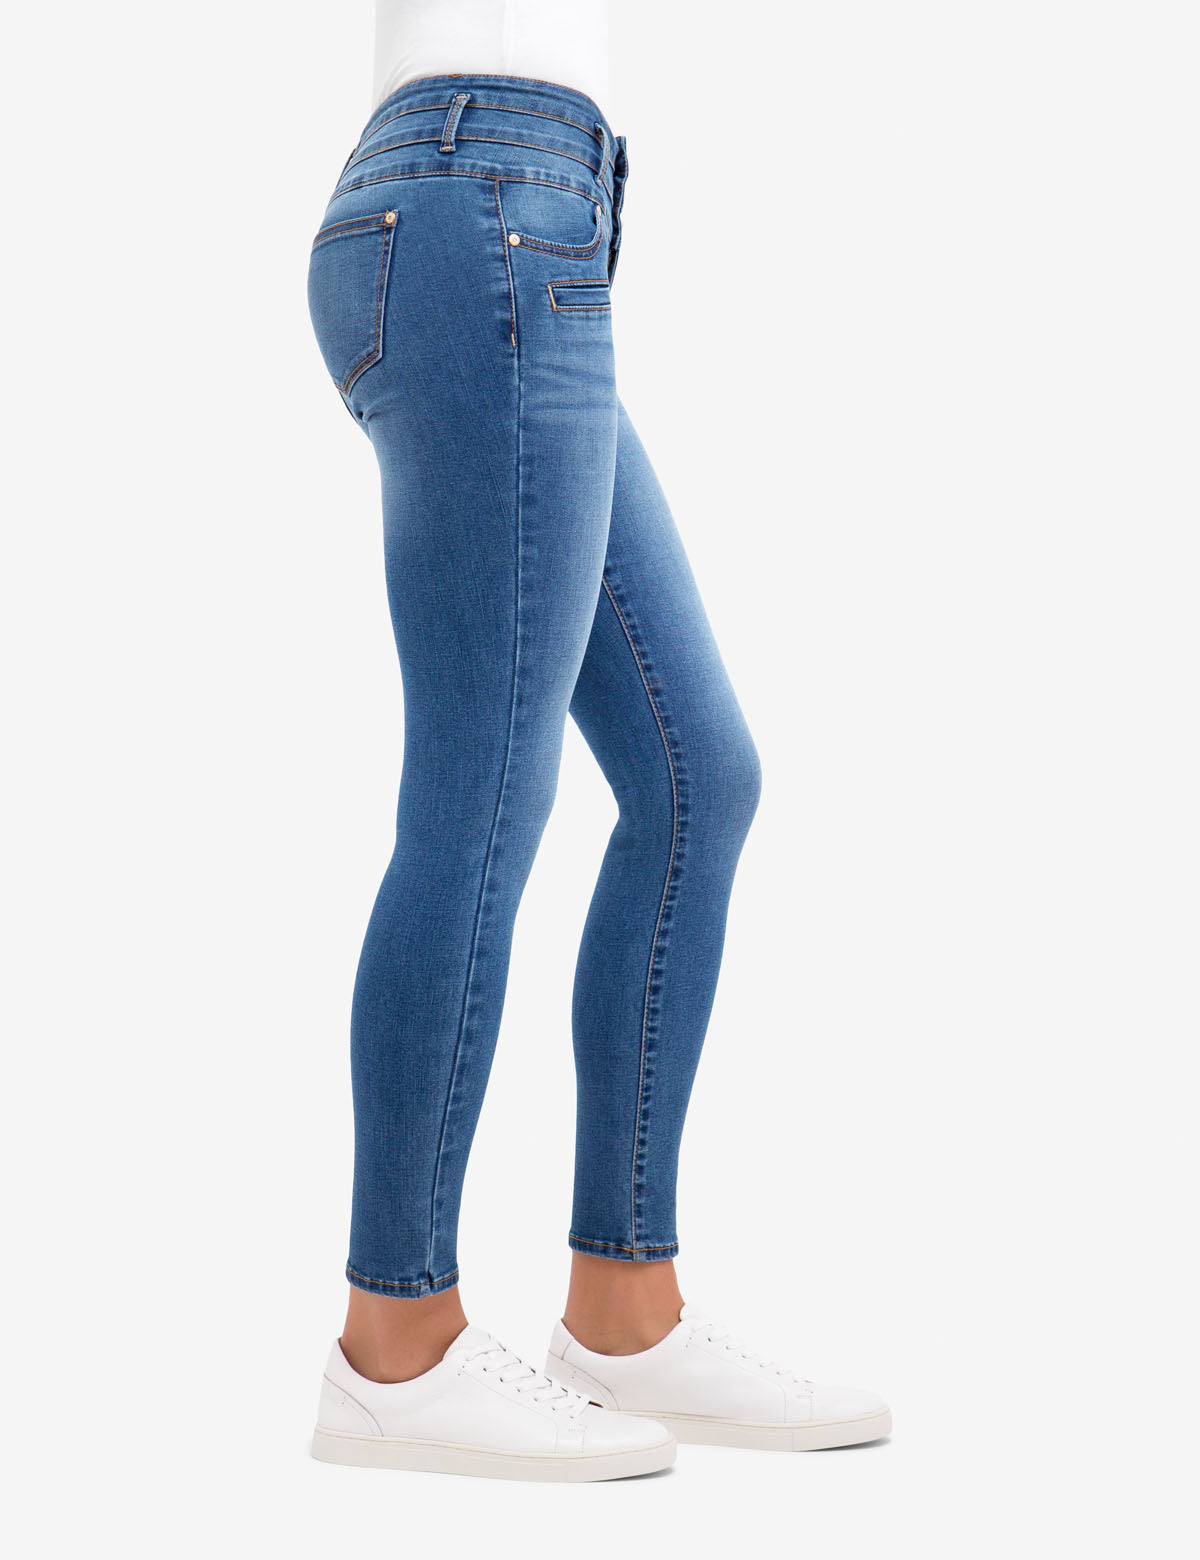 polo skinny jeans